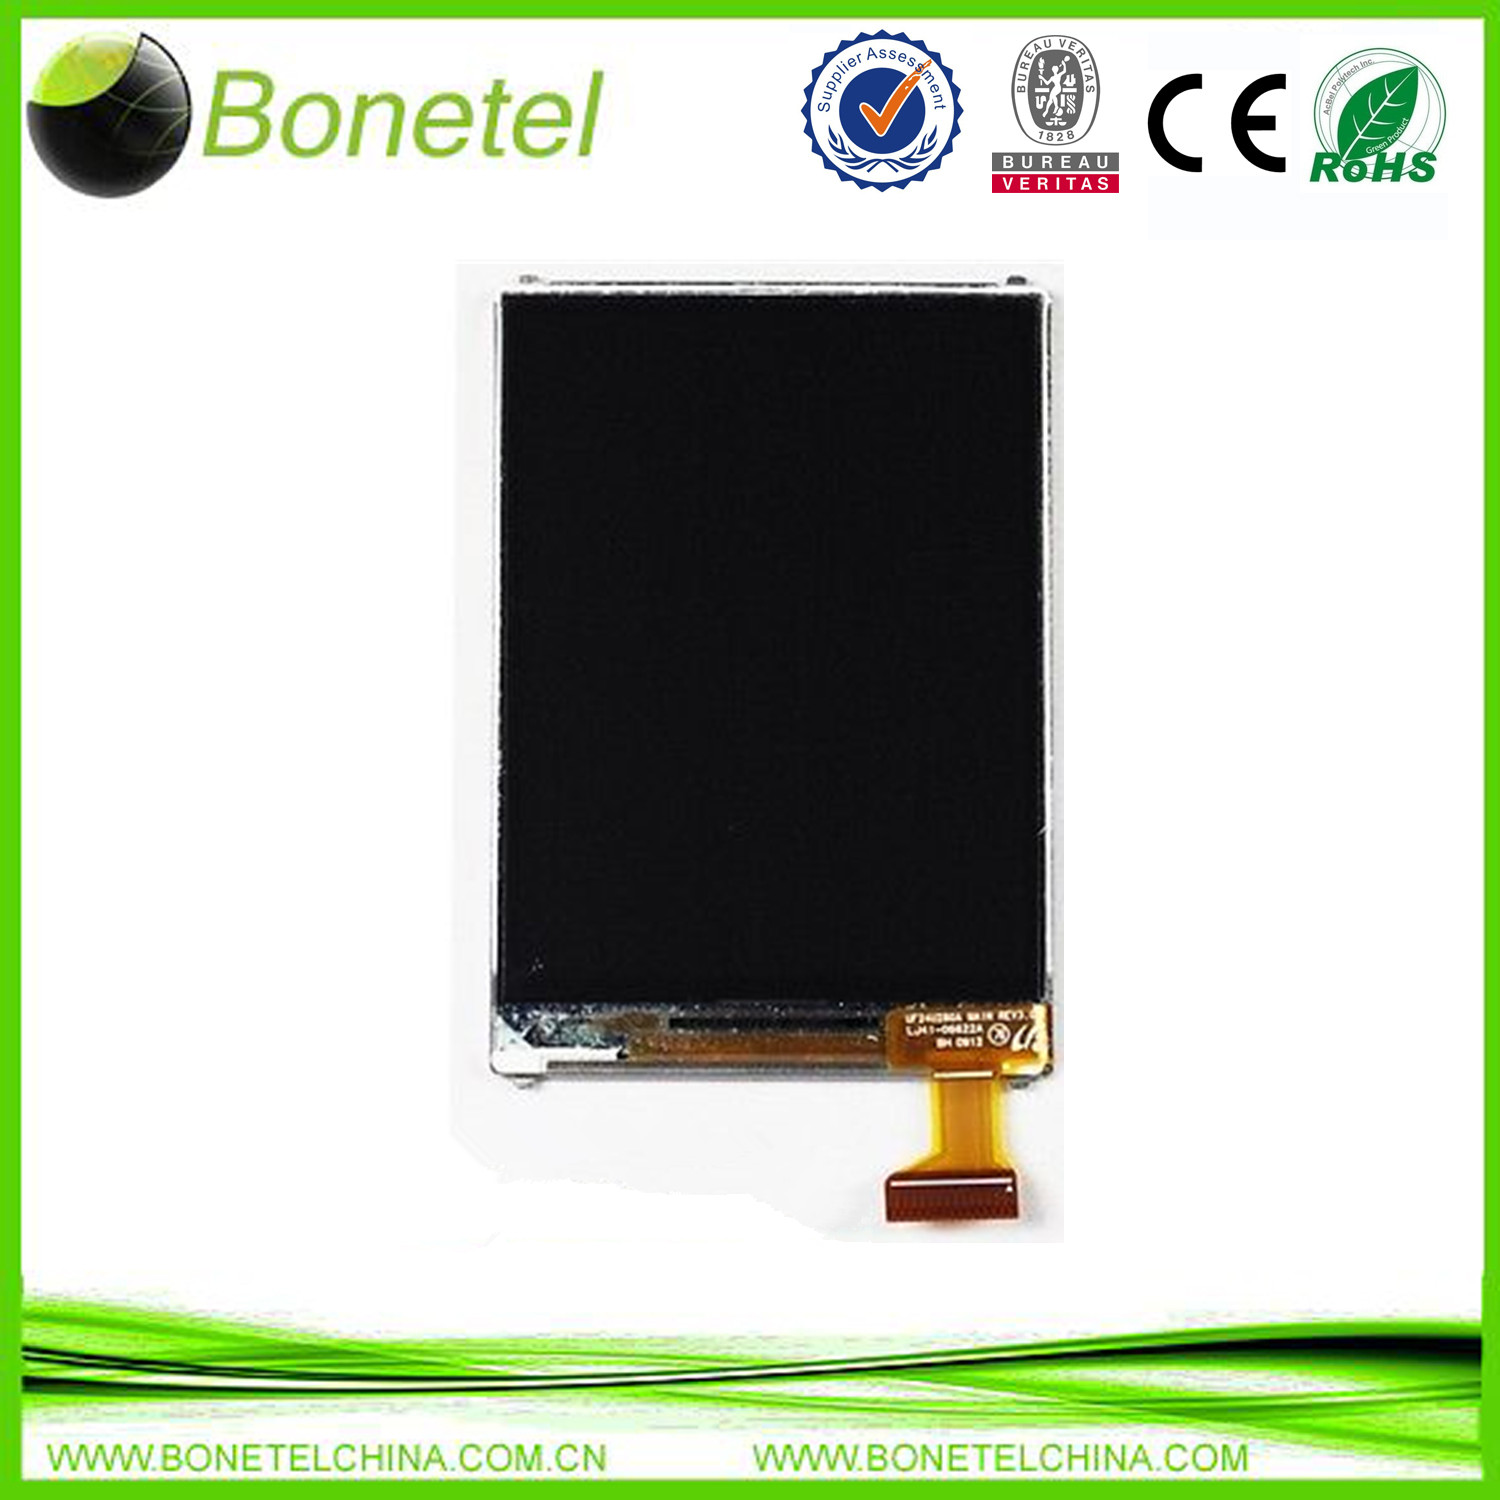 LCD for Samsung LCDSAMS3930/S3930